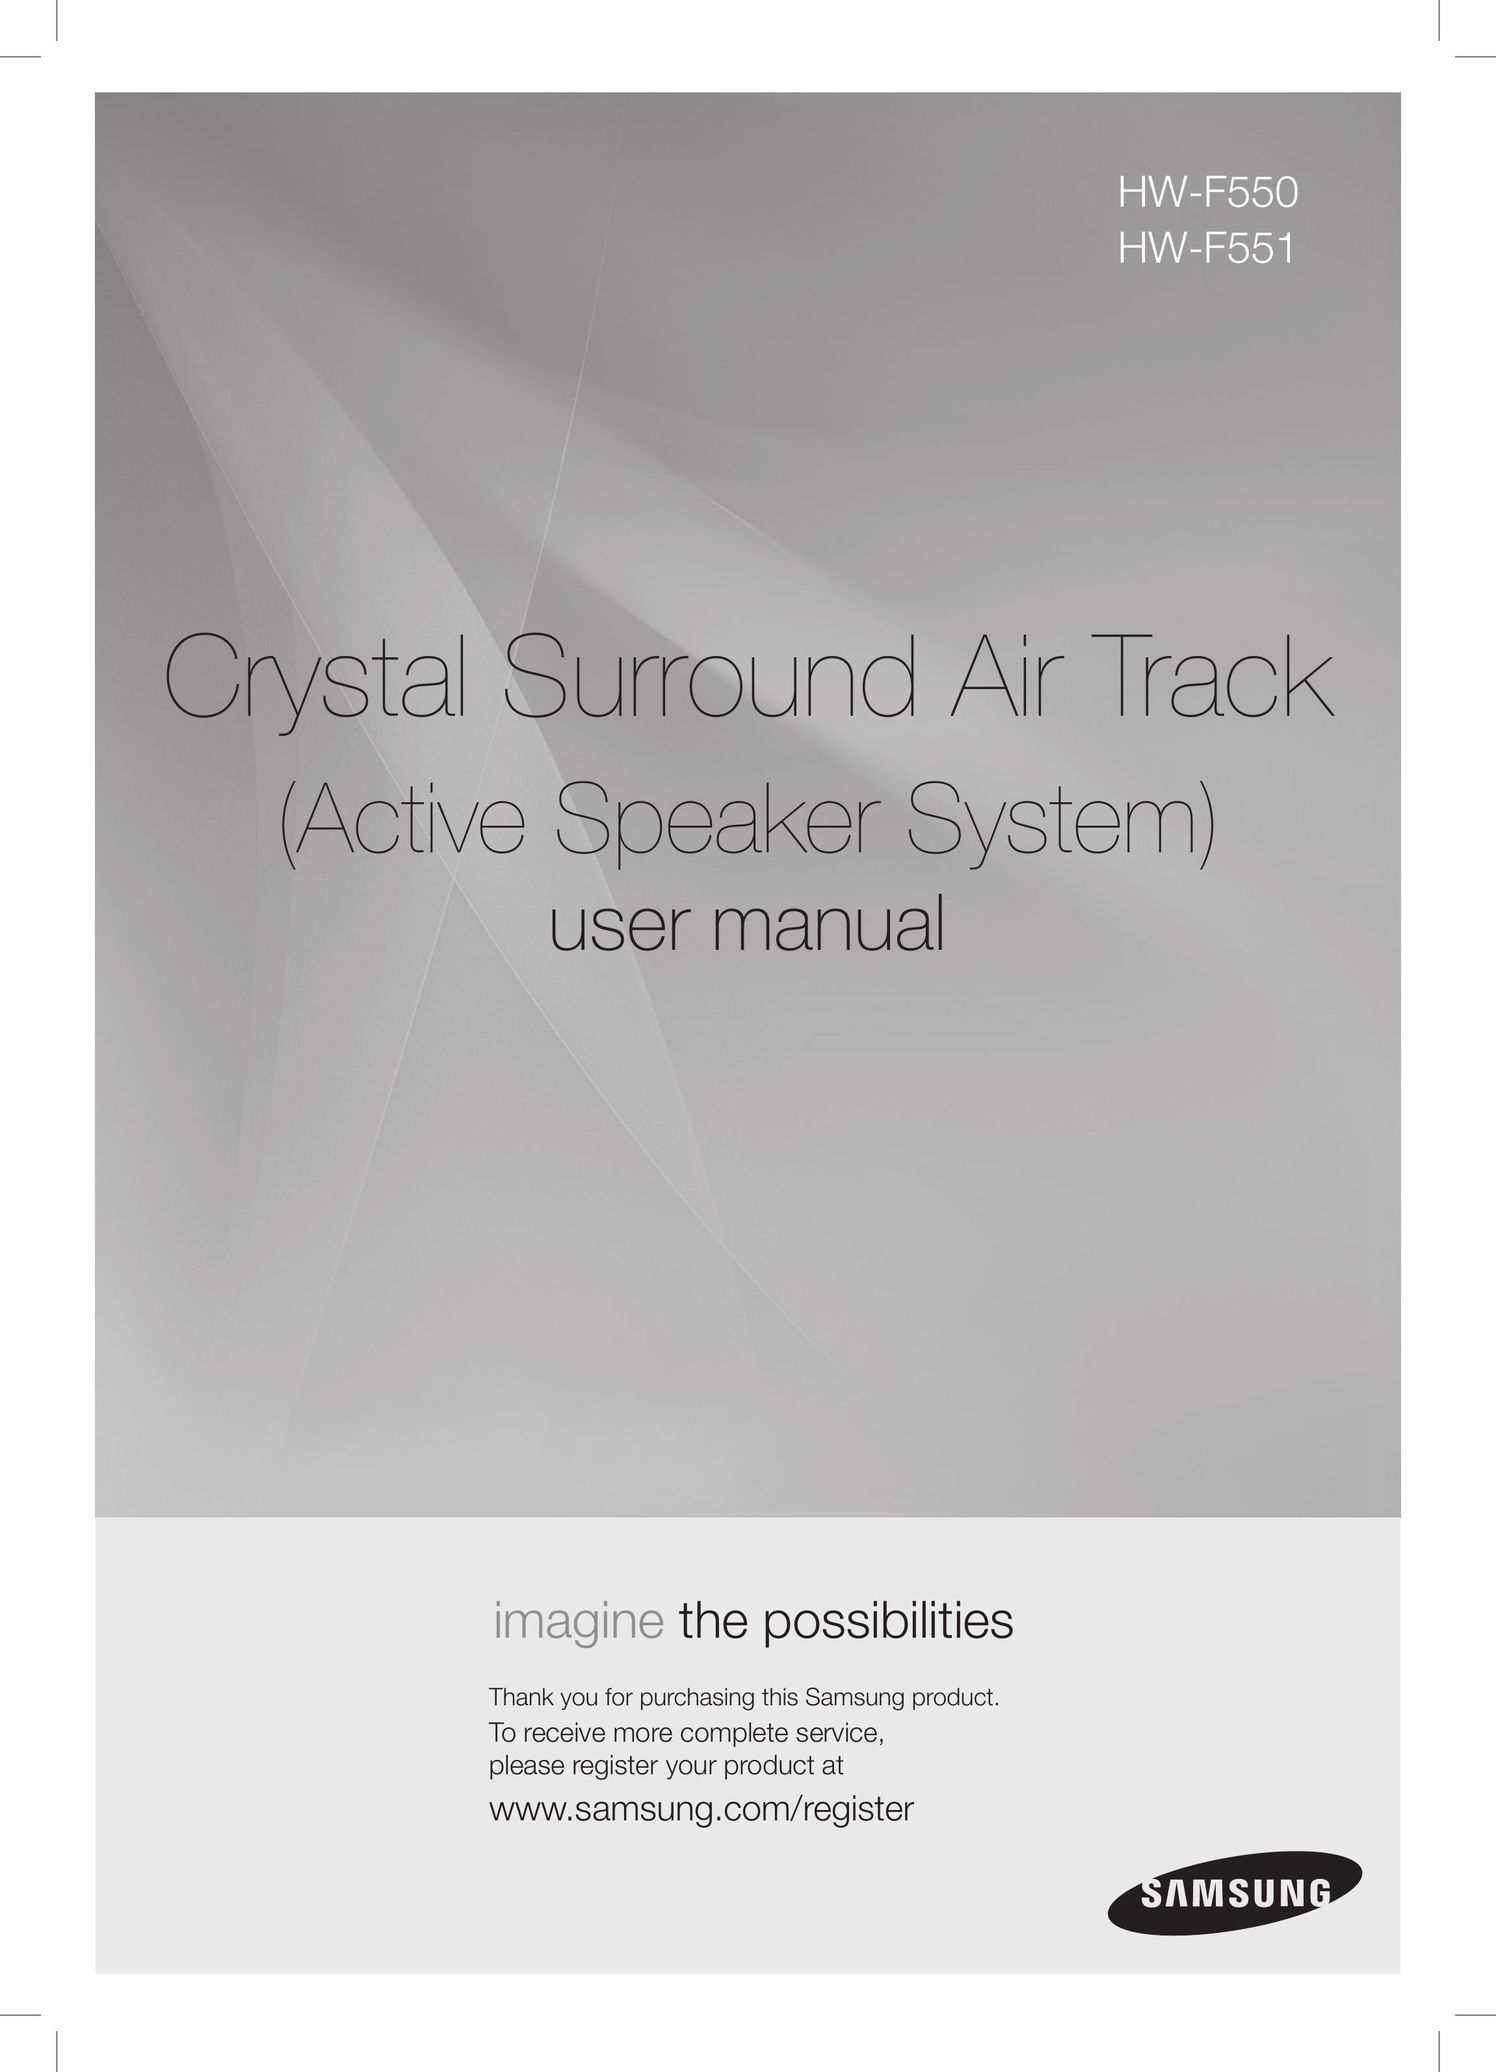 Samsung HW F550 Speaker System User Manual